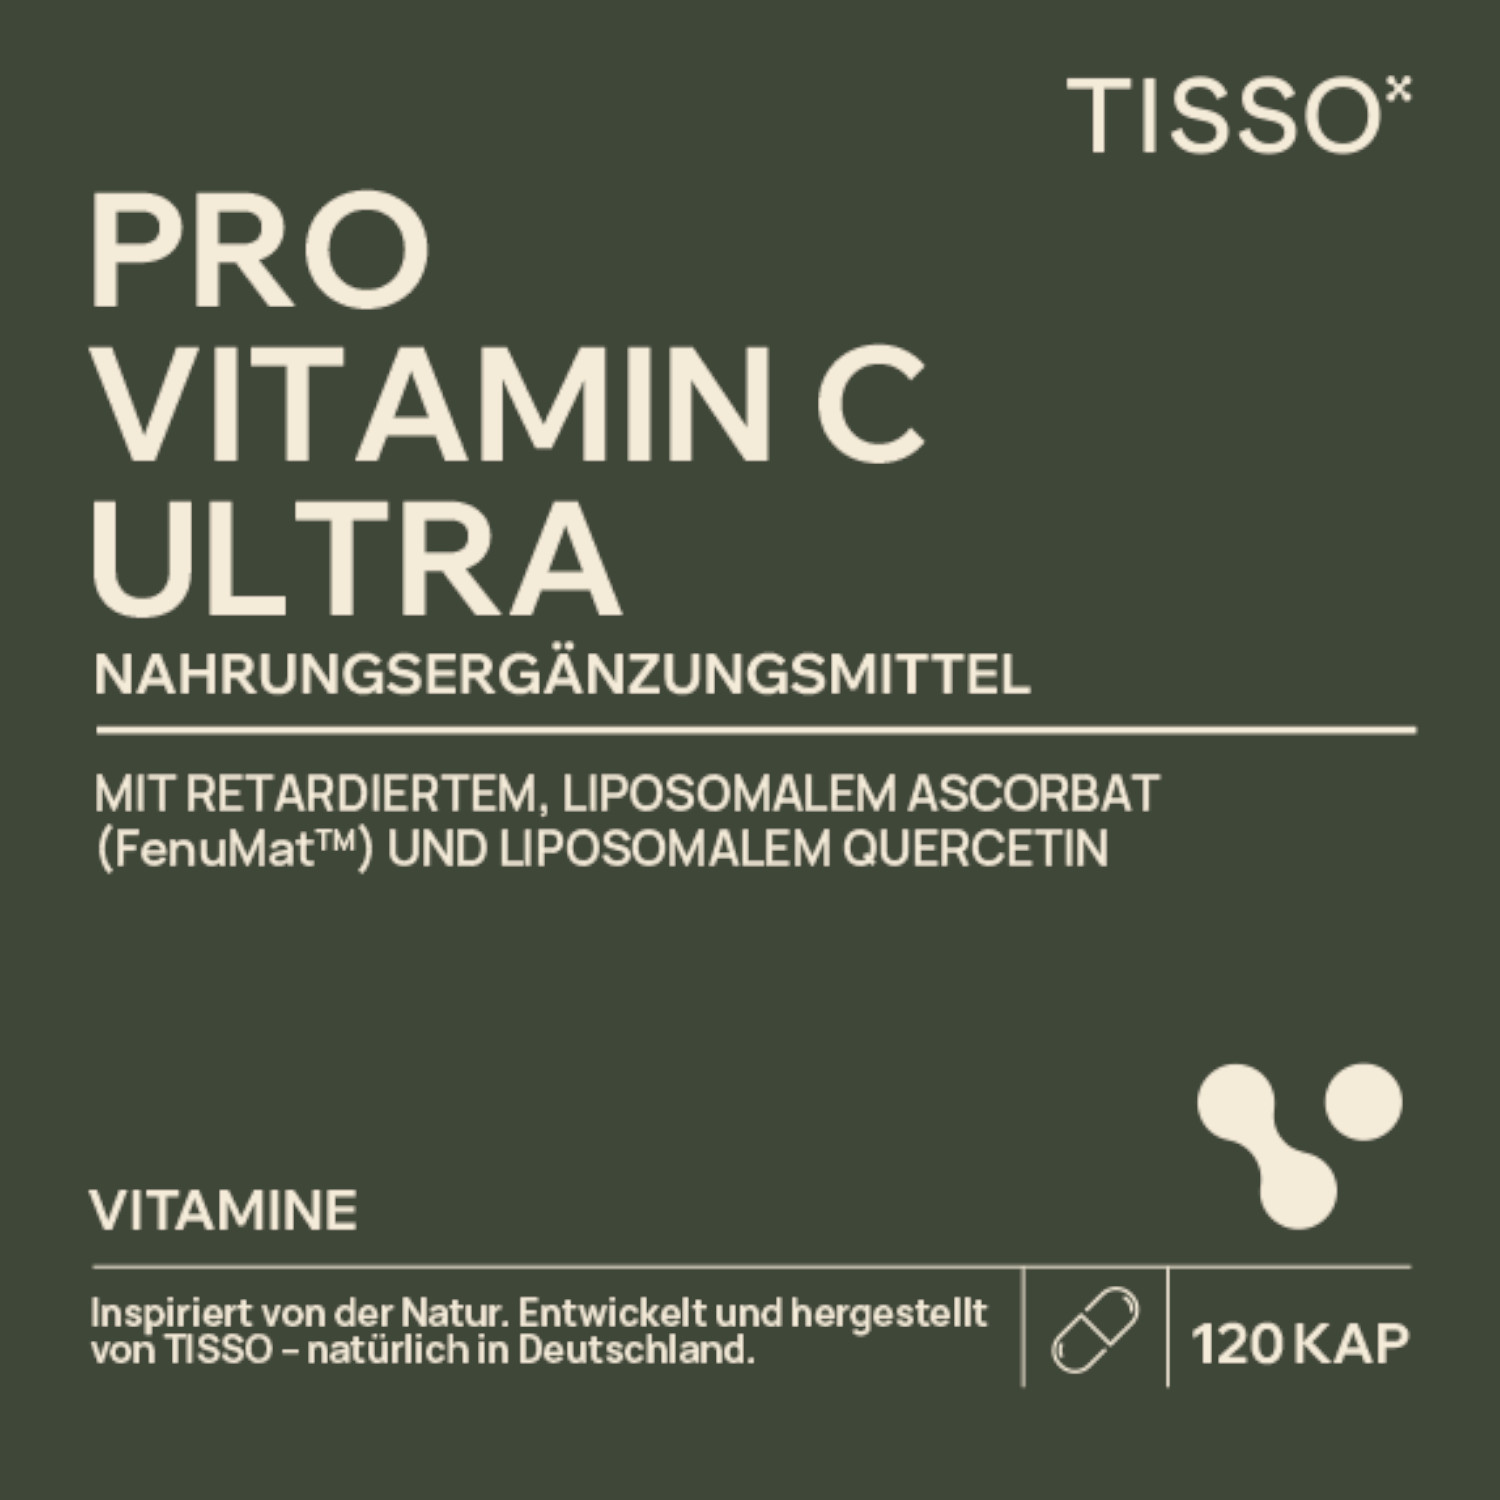 Pro Vitamin C Ultra von TISSO - Label